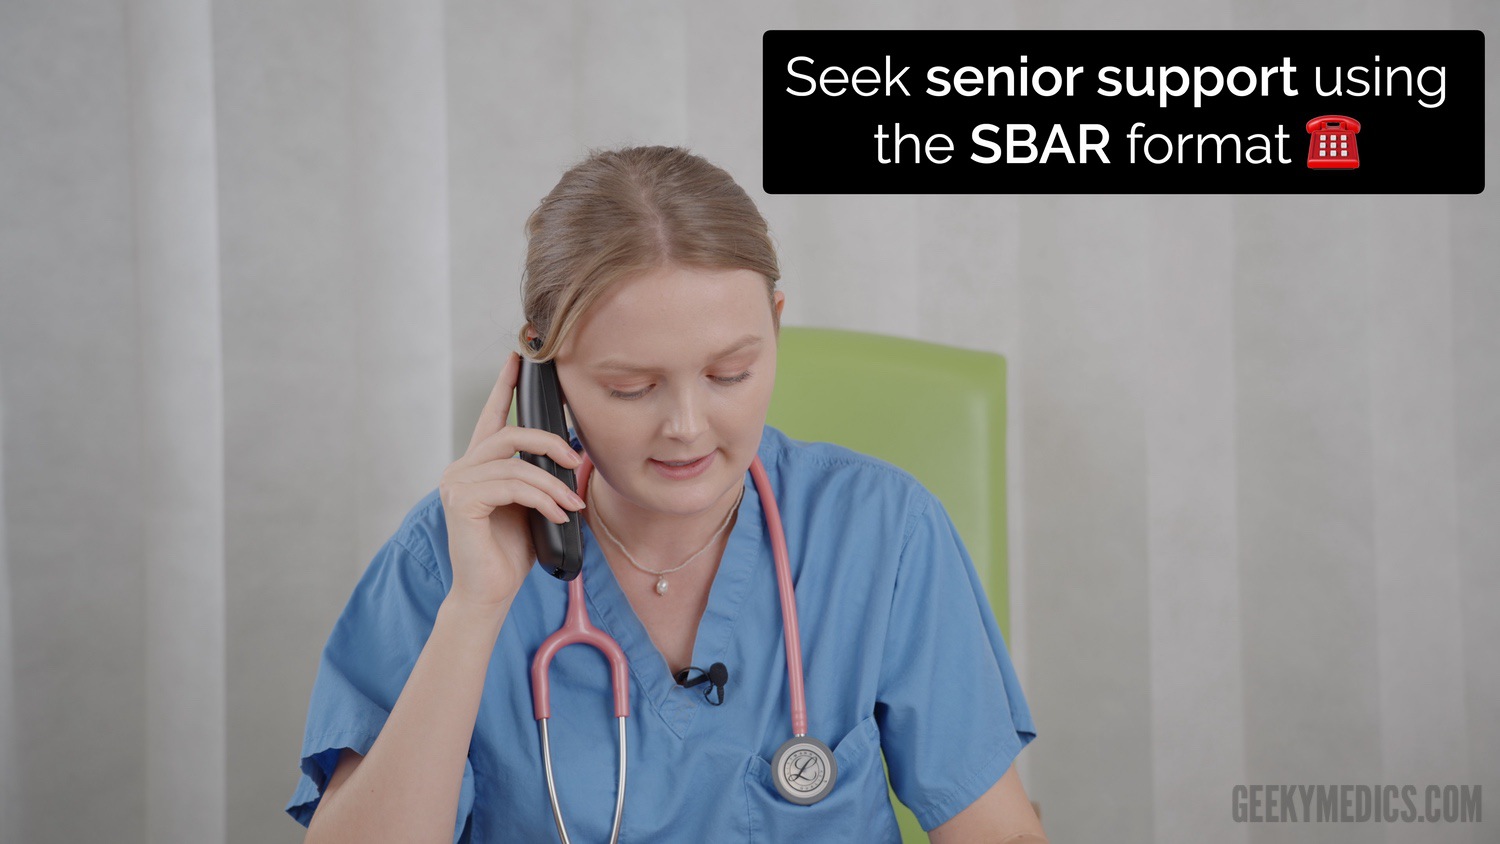 Seek senior support using SBAR format